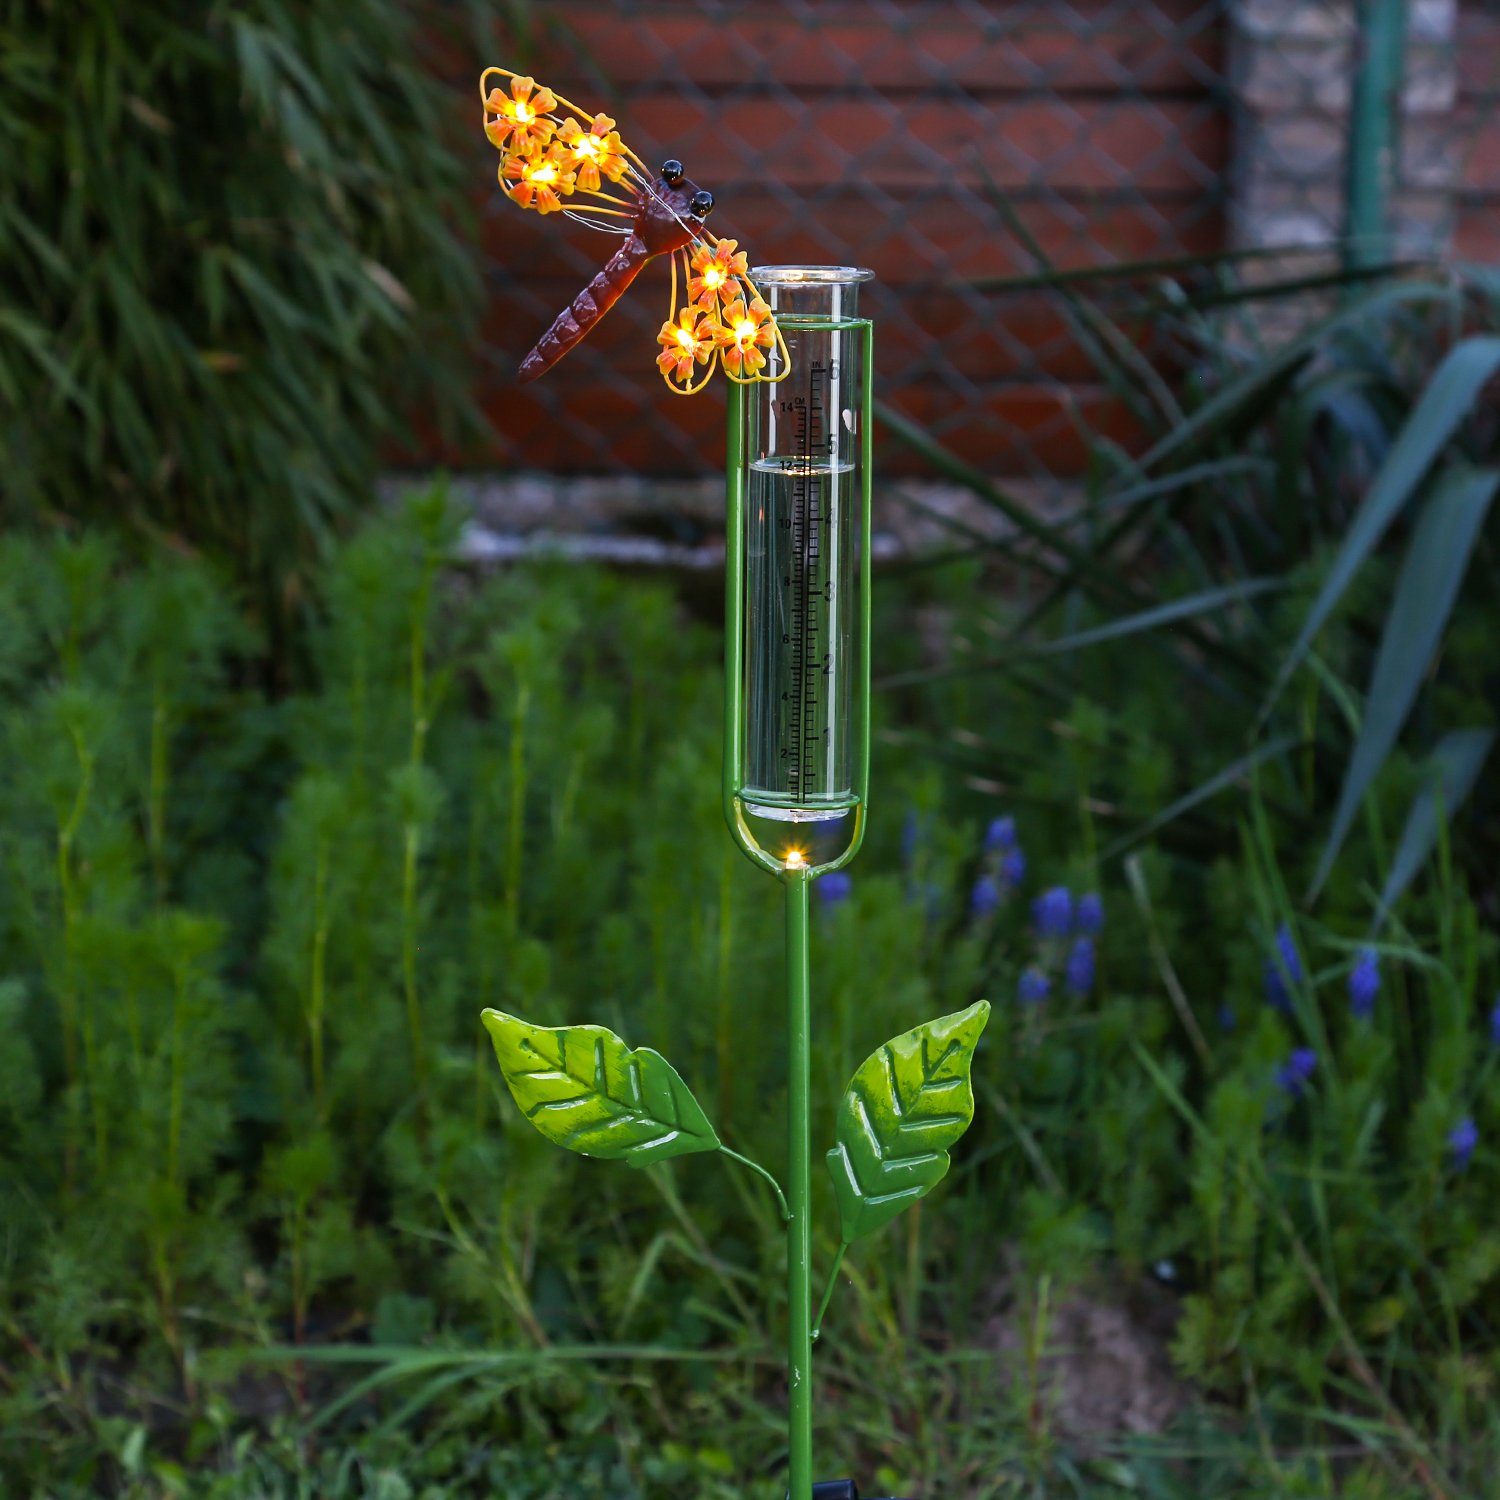 MARELIDA LED Solarleuchte LED Solar Regenmesser Libelle Gartenstecker Gartendeko 98cm, LED Classic, warmweiß (2100K bis 3000K)